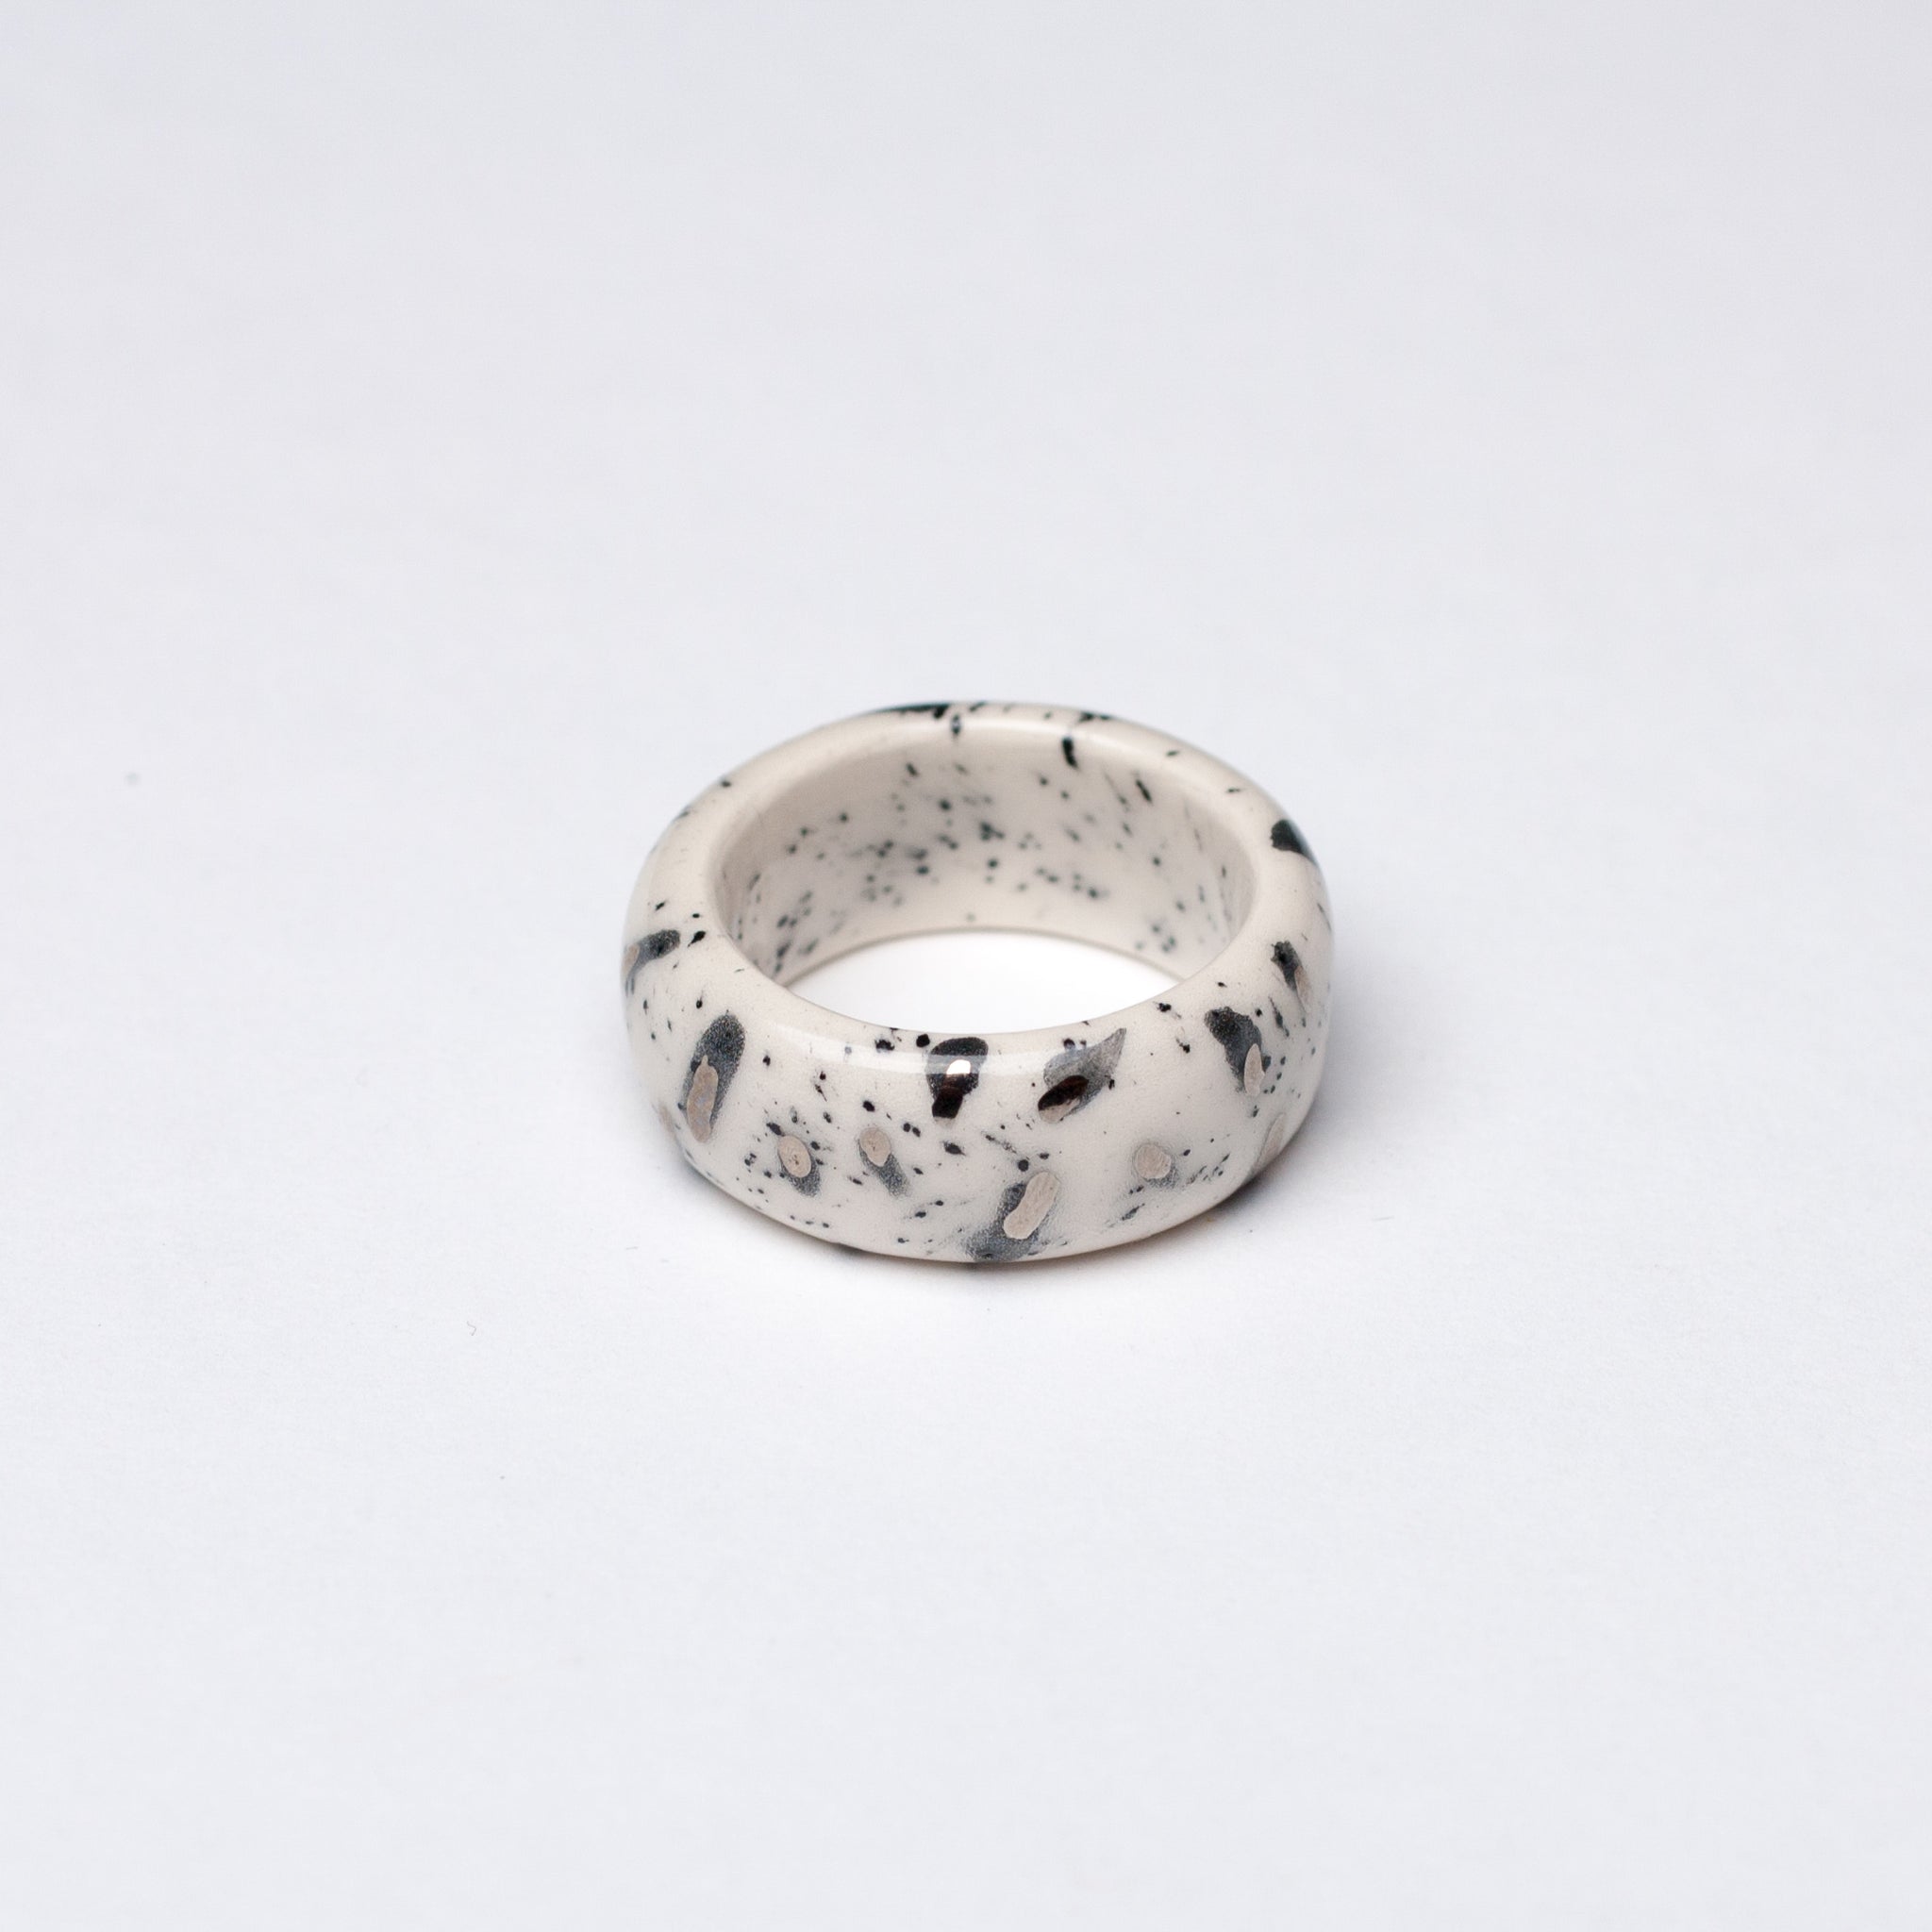 Ceramic ring Bona Dea size 19.5